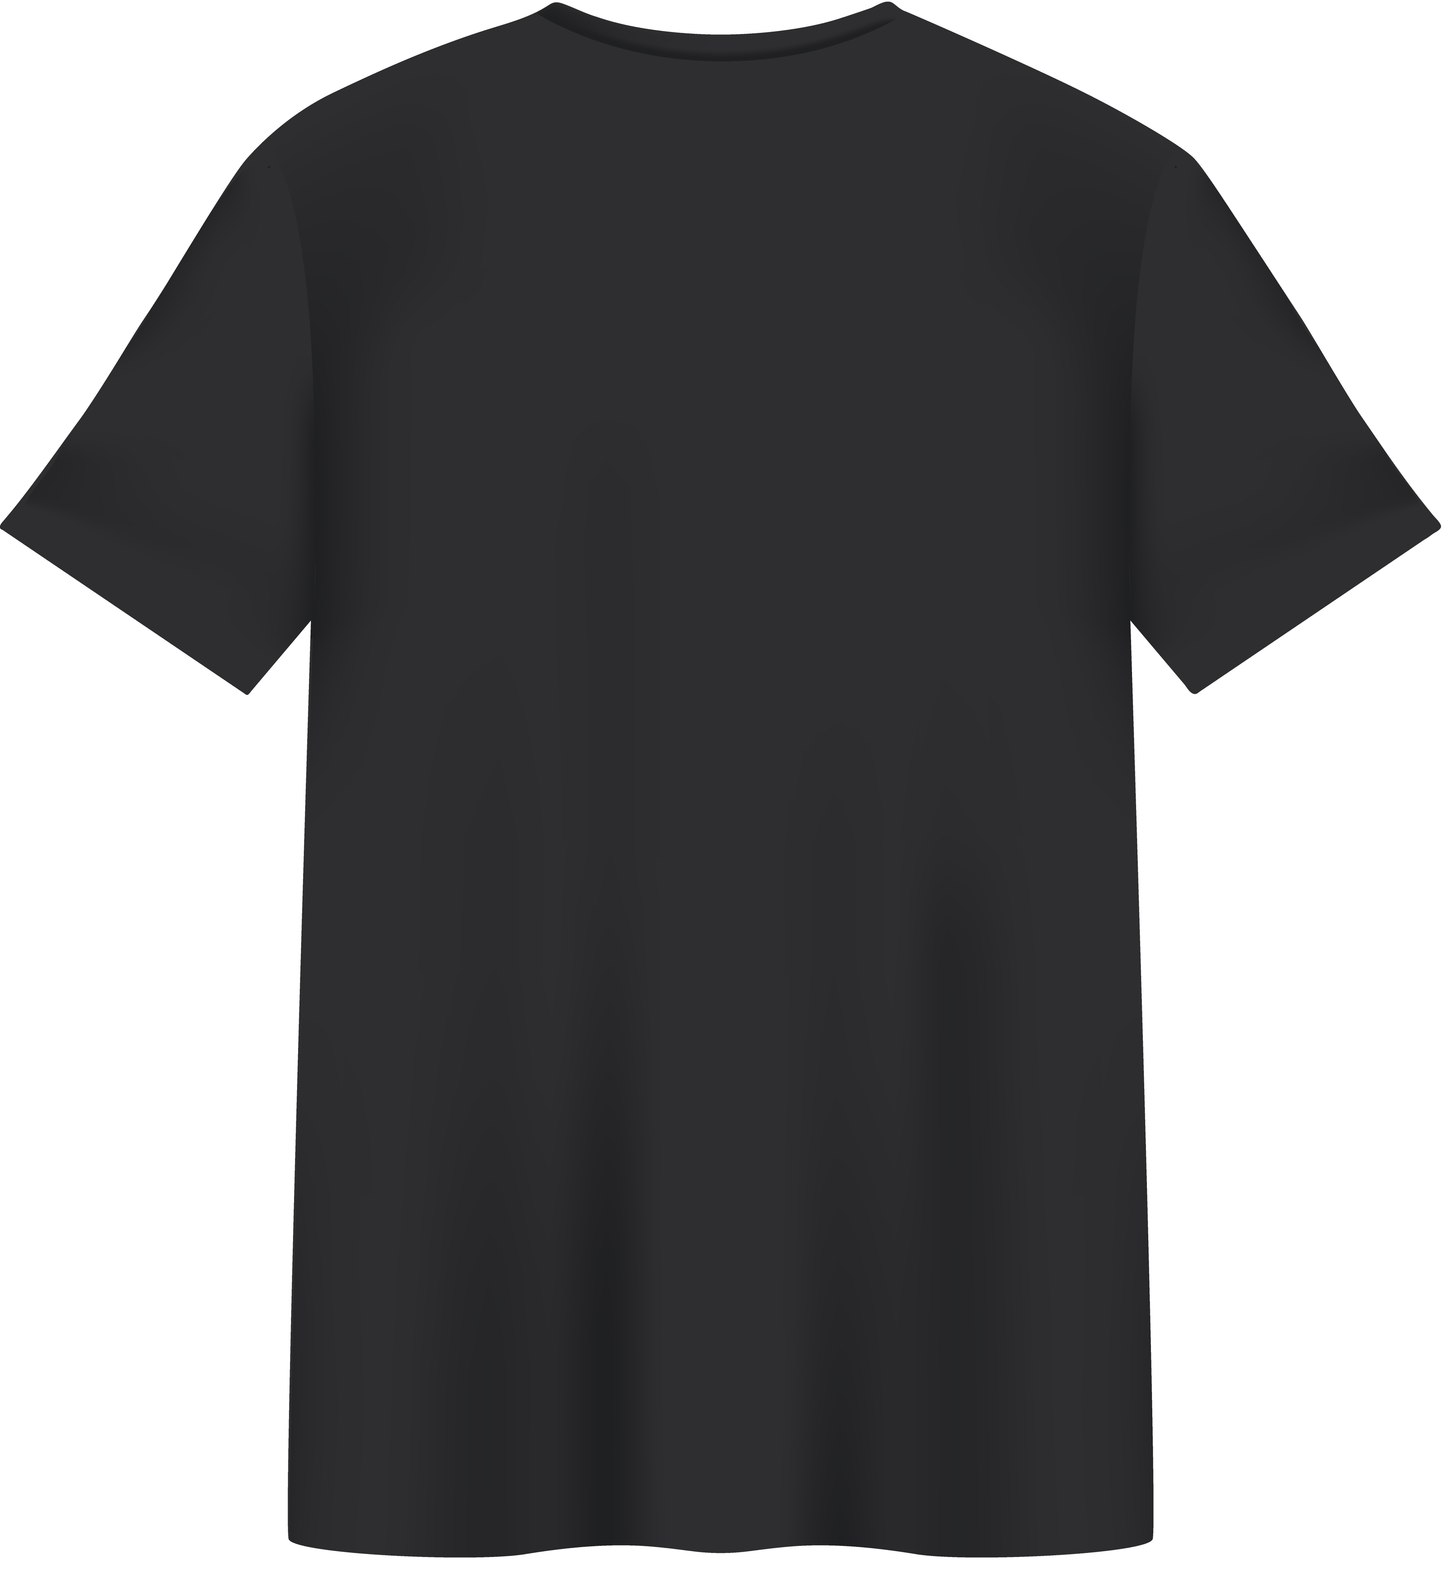 "A" Rocket Black T-Shirt